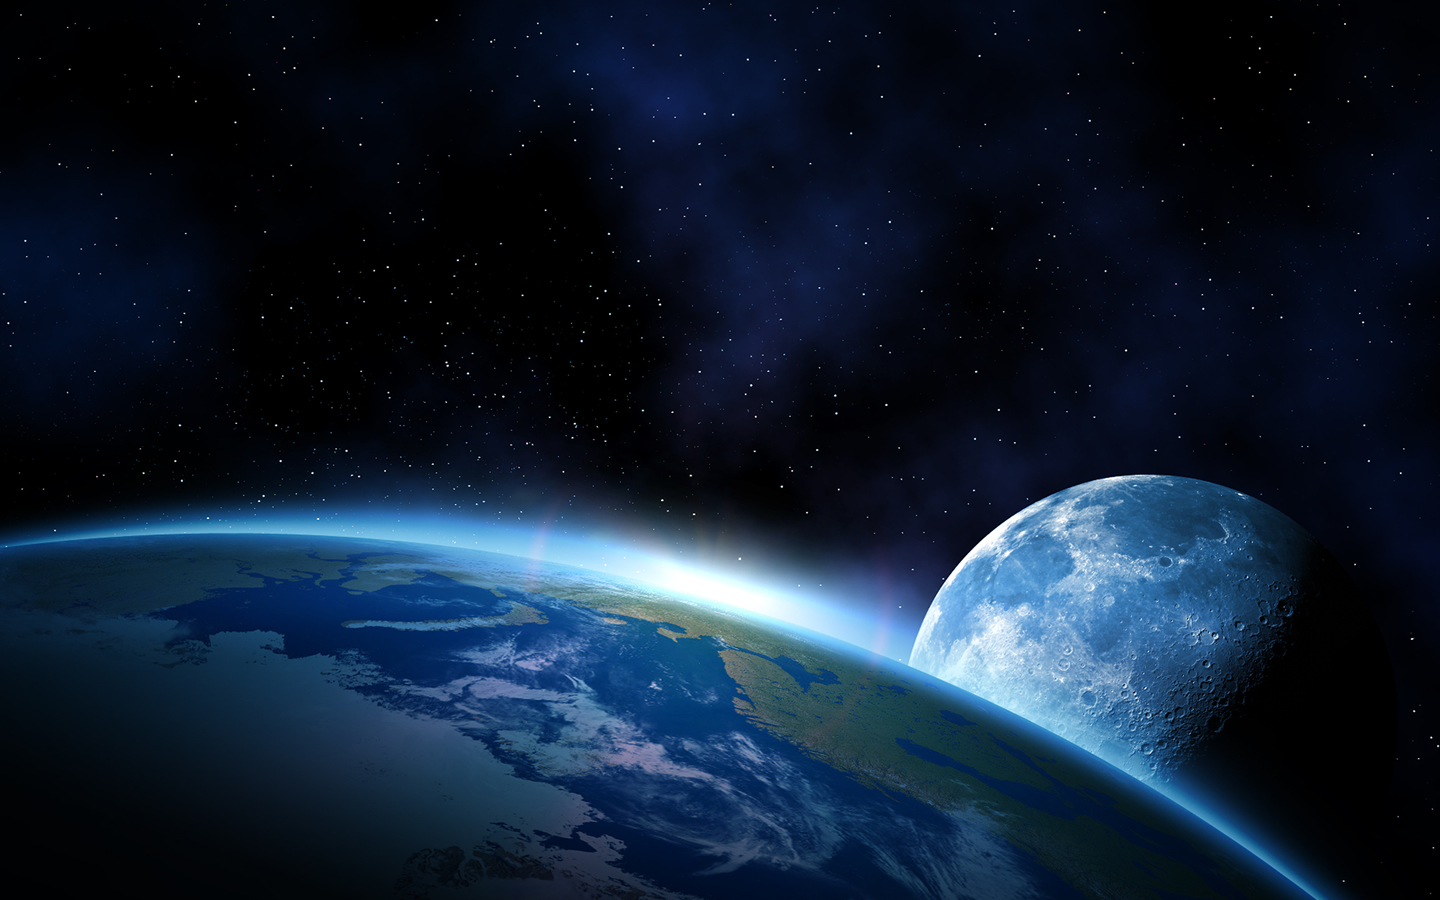 Earth's “interstellar marathon”: the mystery of silence amid